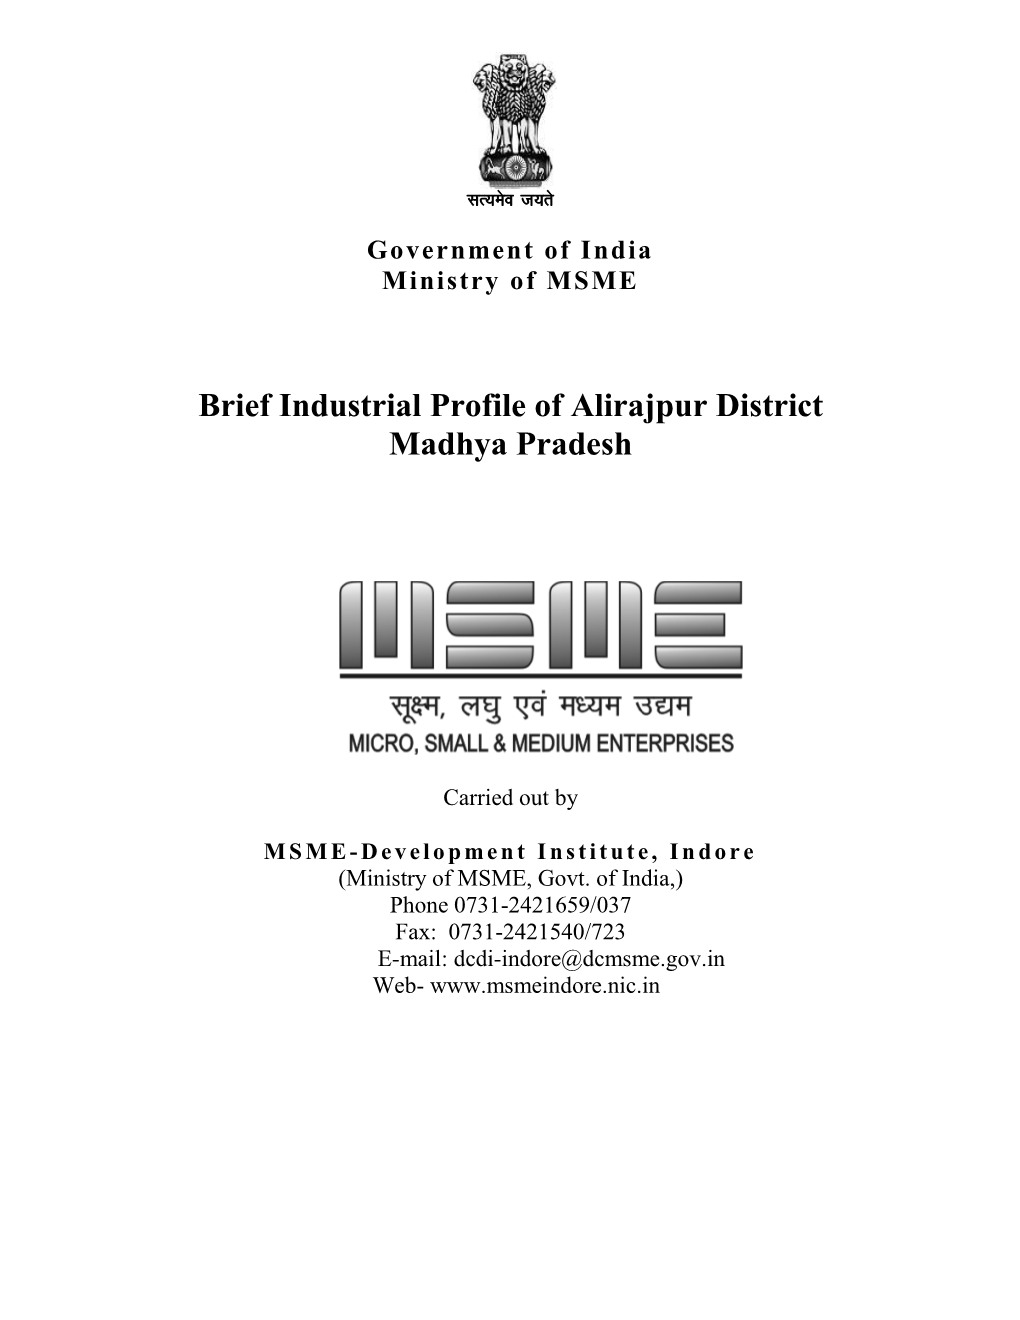 Brief Industrial Profile of Alirajpur District Madhya Pradesh